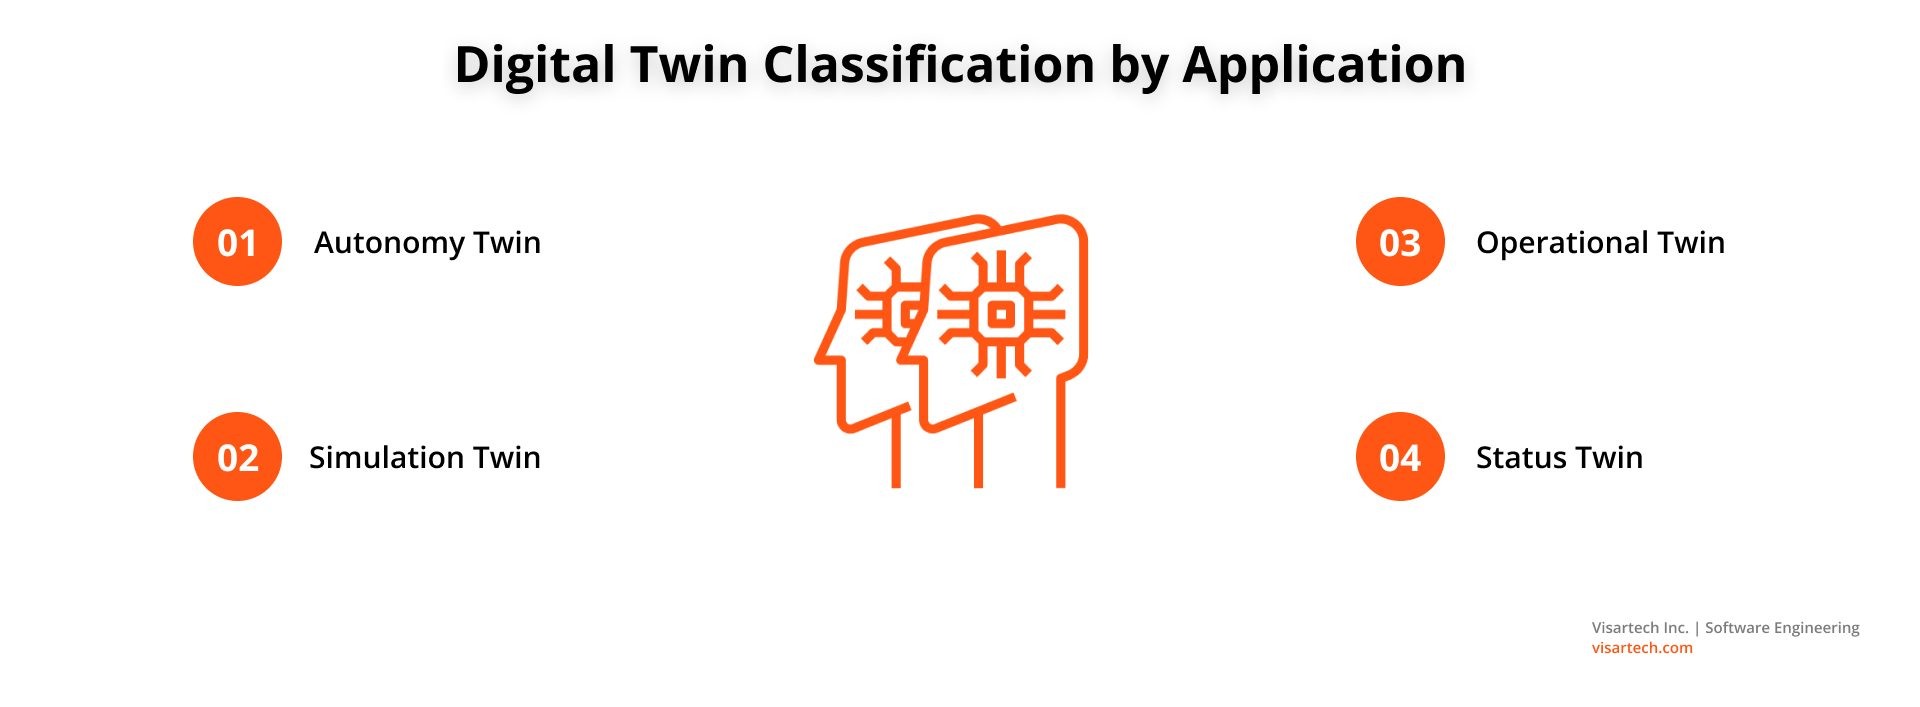 Digital Twin Classification by Application - Visartech Blog